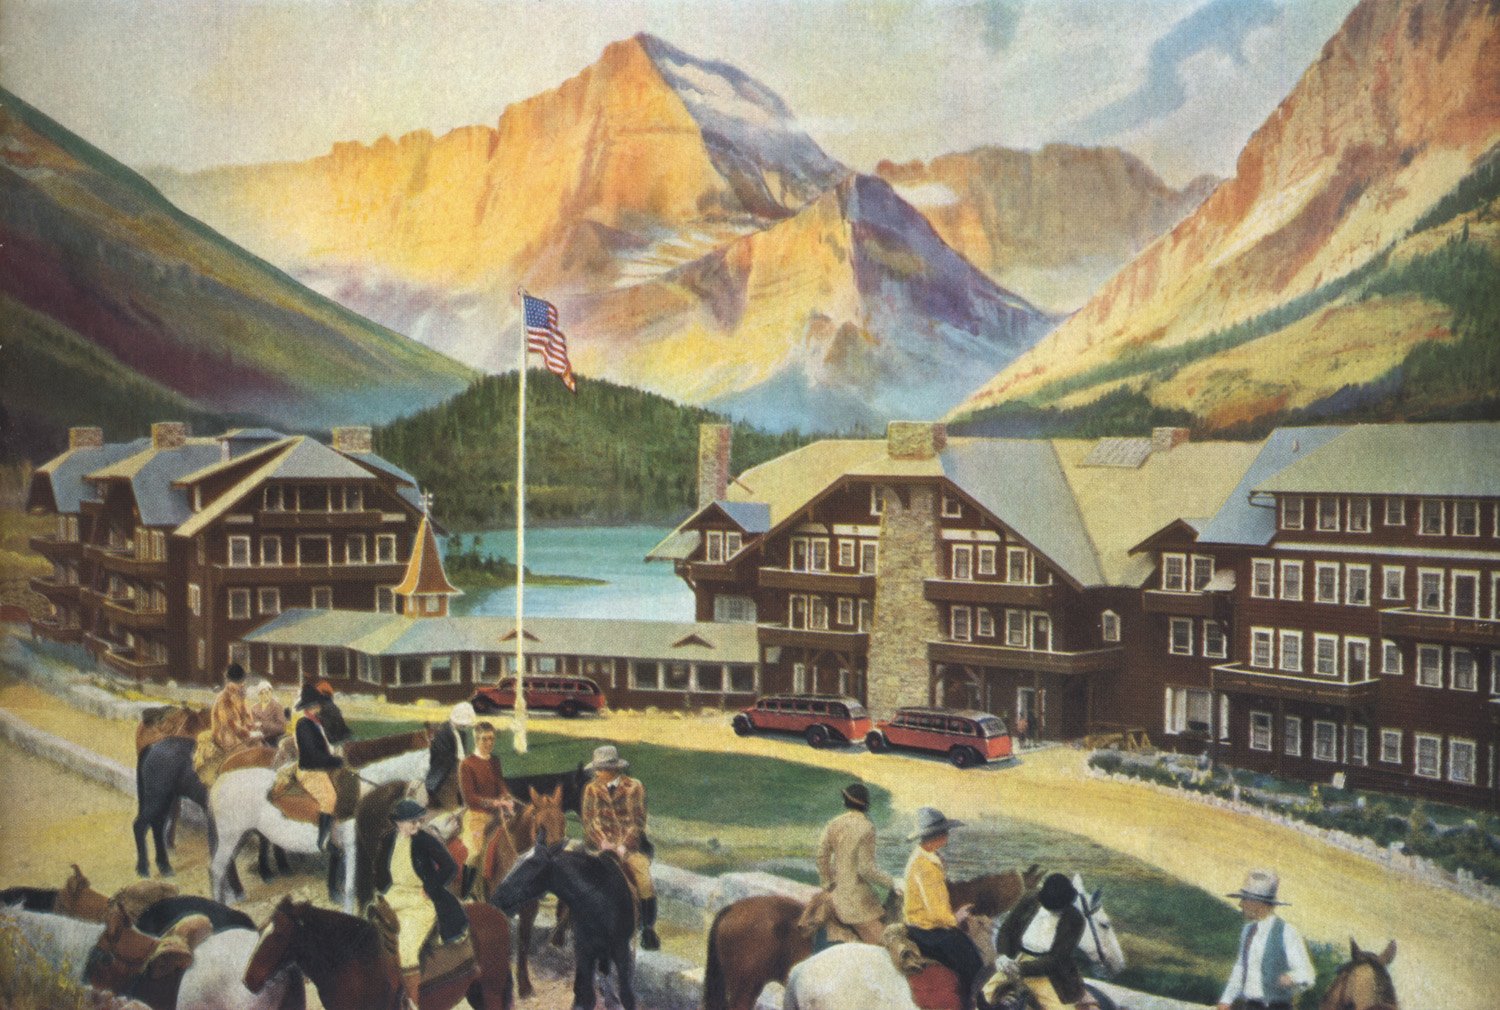 Glacier National Park: Glacier Hotel and Tourists - ca. 1935 Lithograph